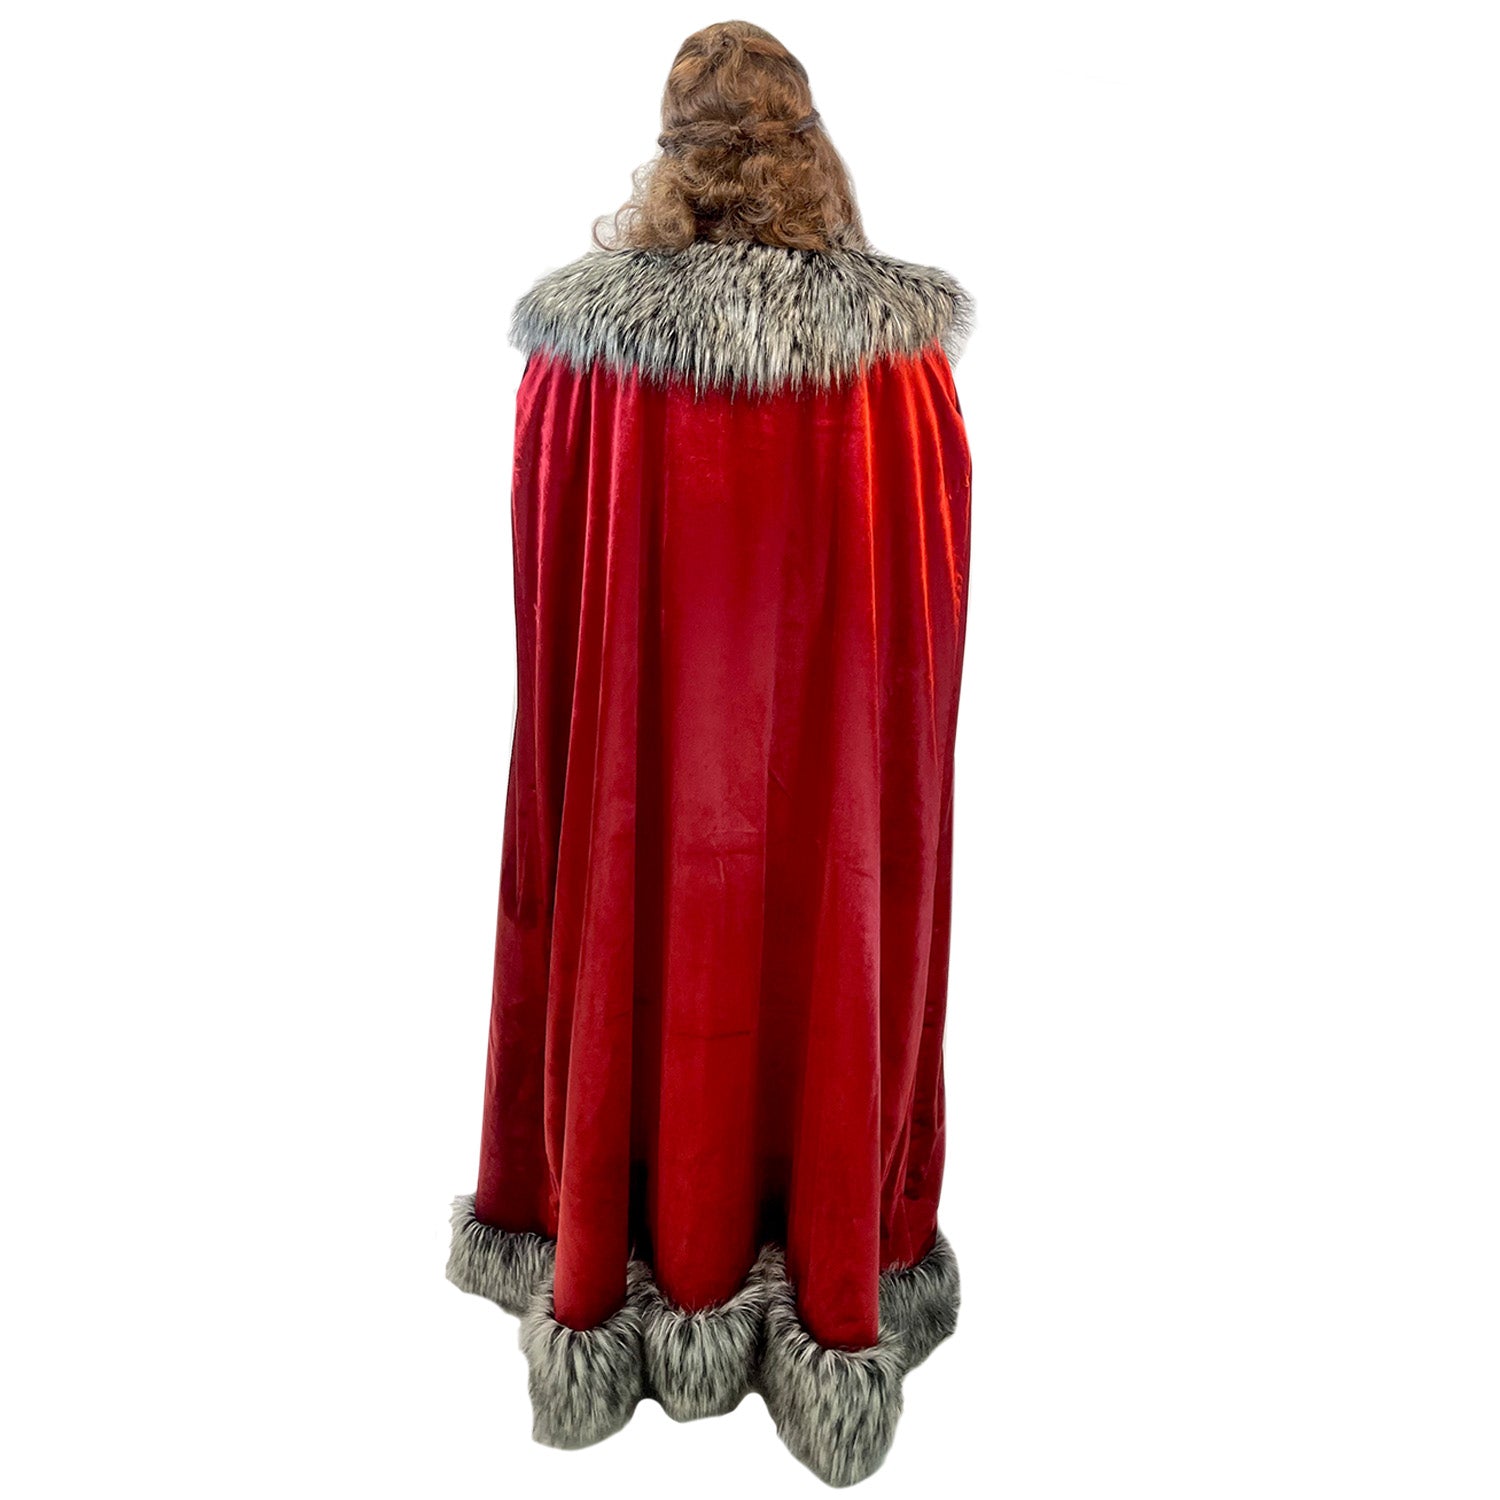 Cloak of Darkness: Red Velvet Cape with Fur Trim